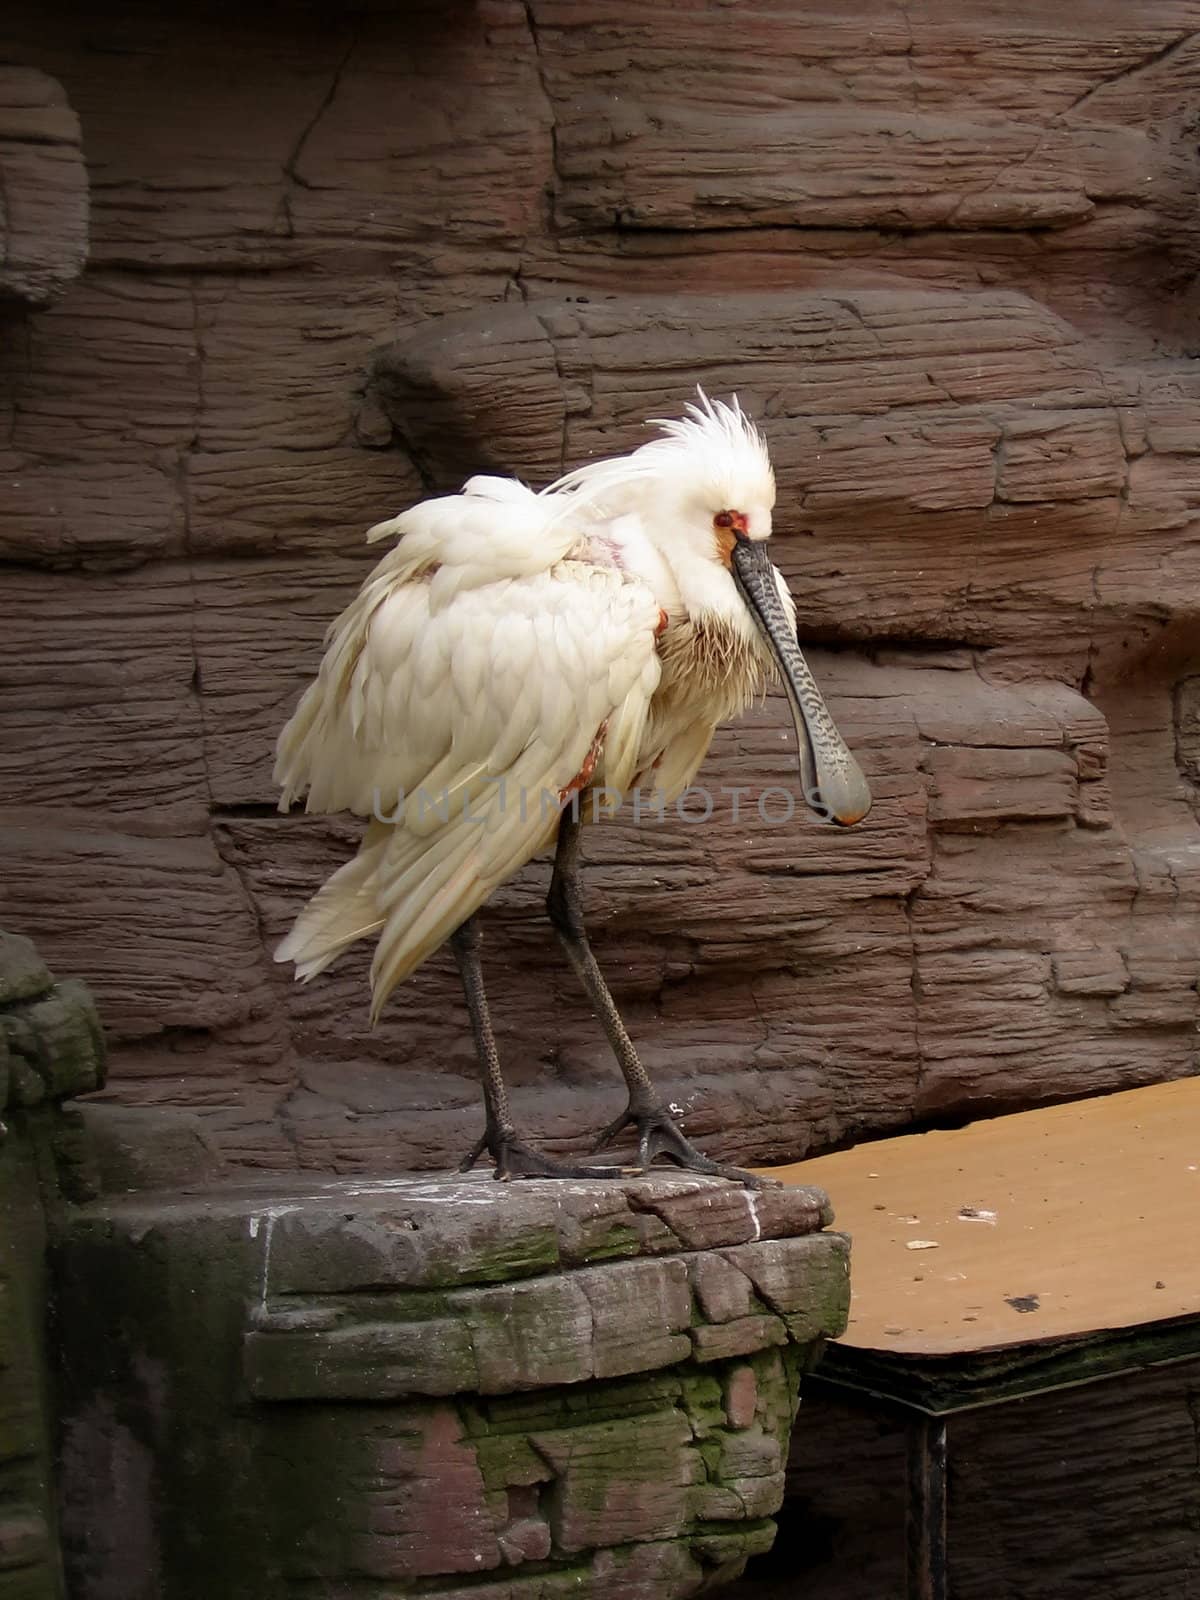 Cute unusual white bird with large beak